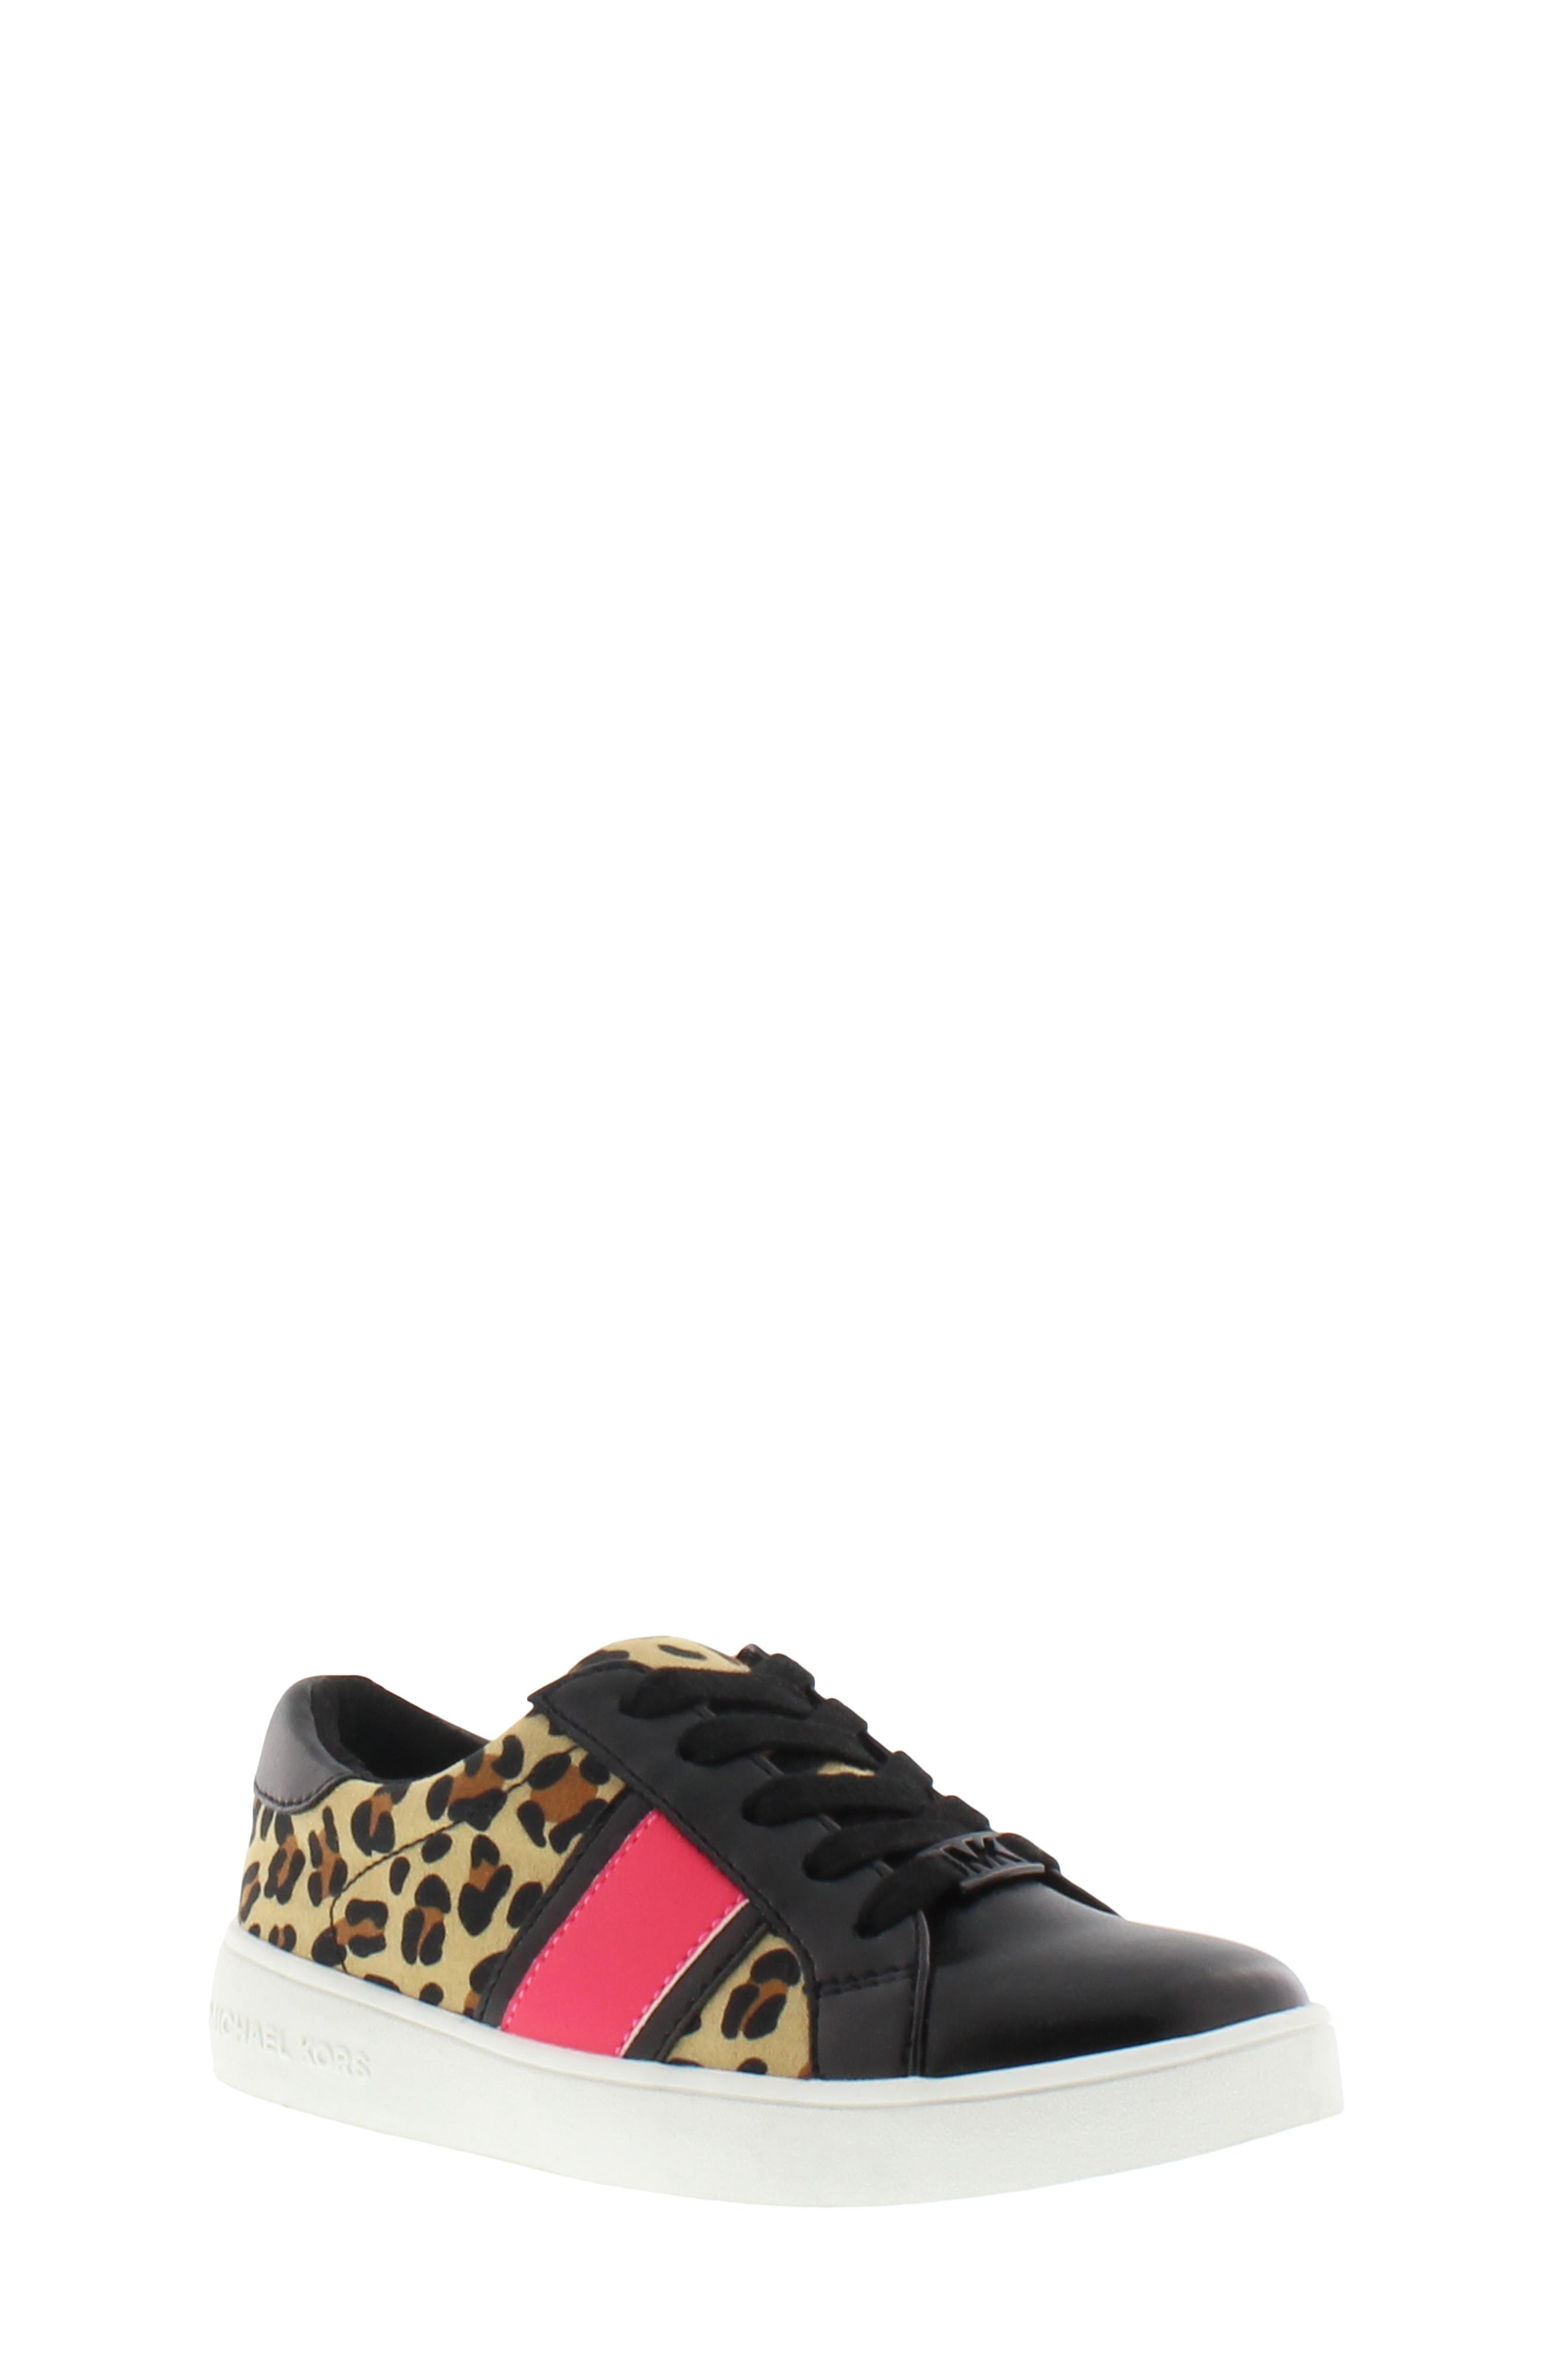 michael kors leopard print sneakers